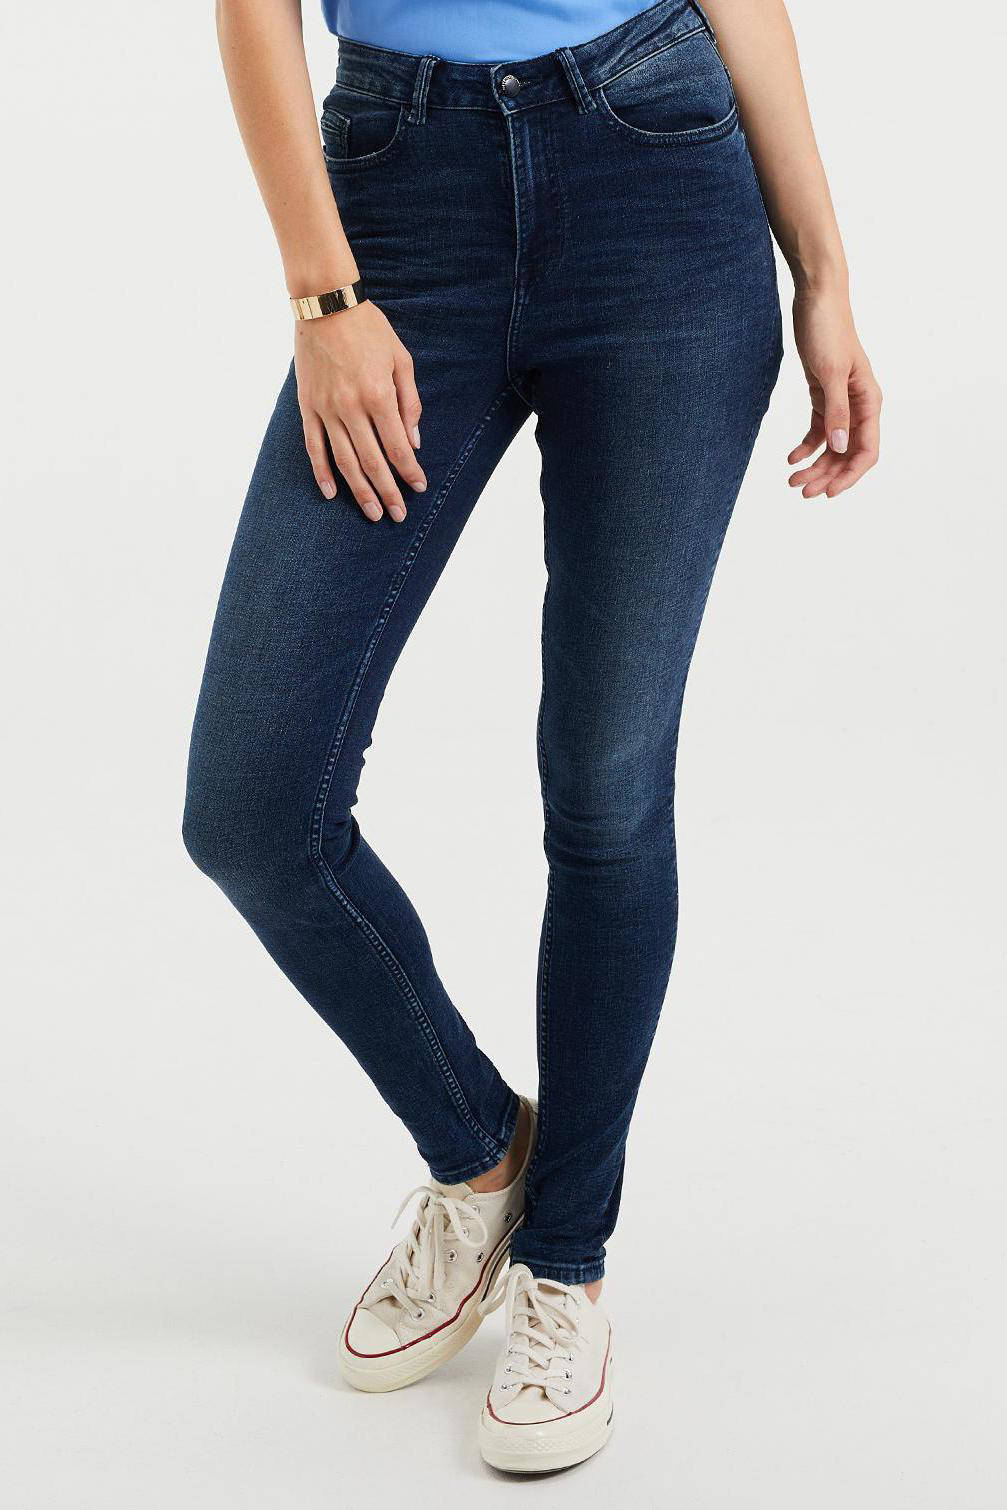 wehkamp Dames Kleding Broeken & Jeans Jeans High Waisted Jeans Blue Ridge high waist skinny jeans black denim 